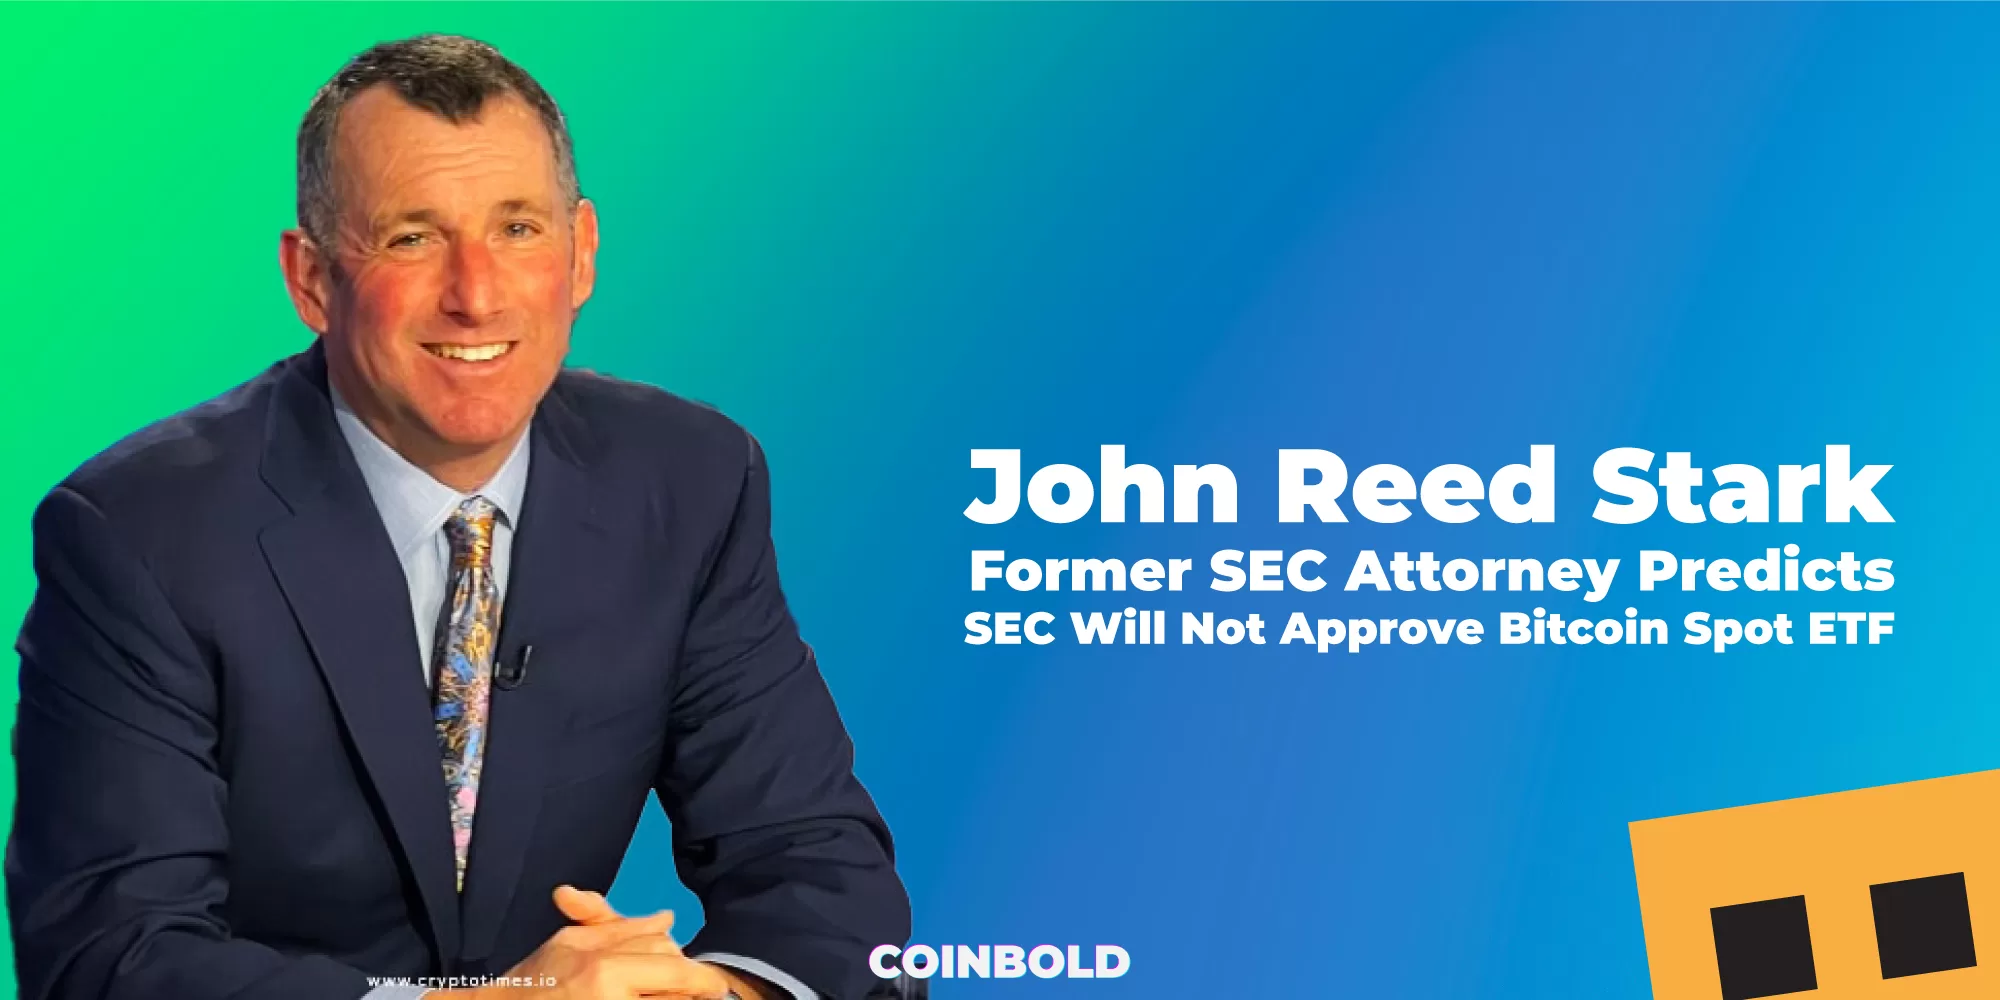 Former SEC Attorney Predicts SEC Will Not Approve Bitcoin Spot ETF